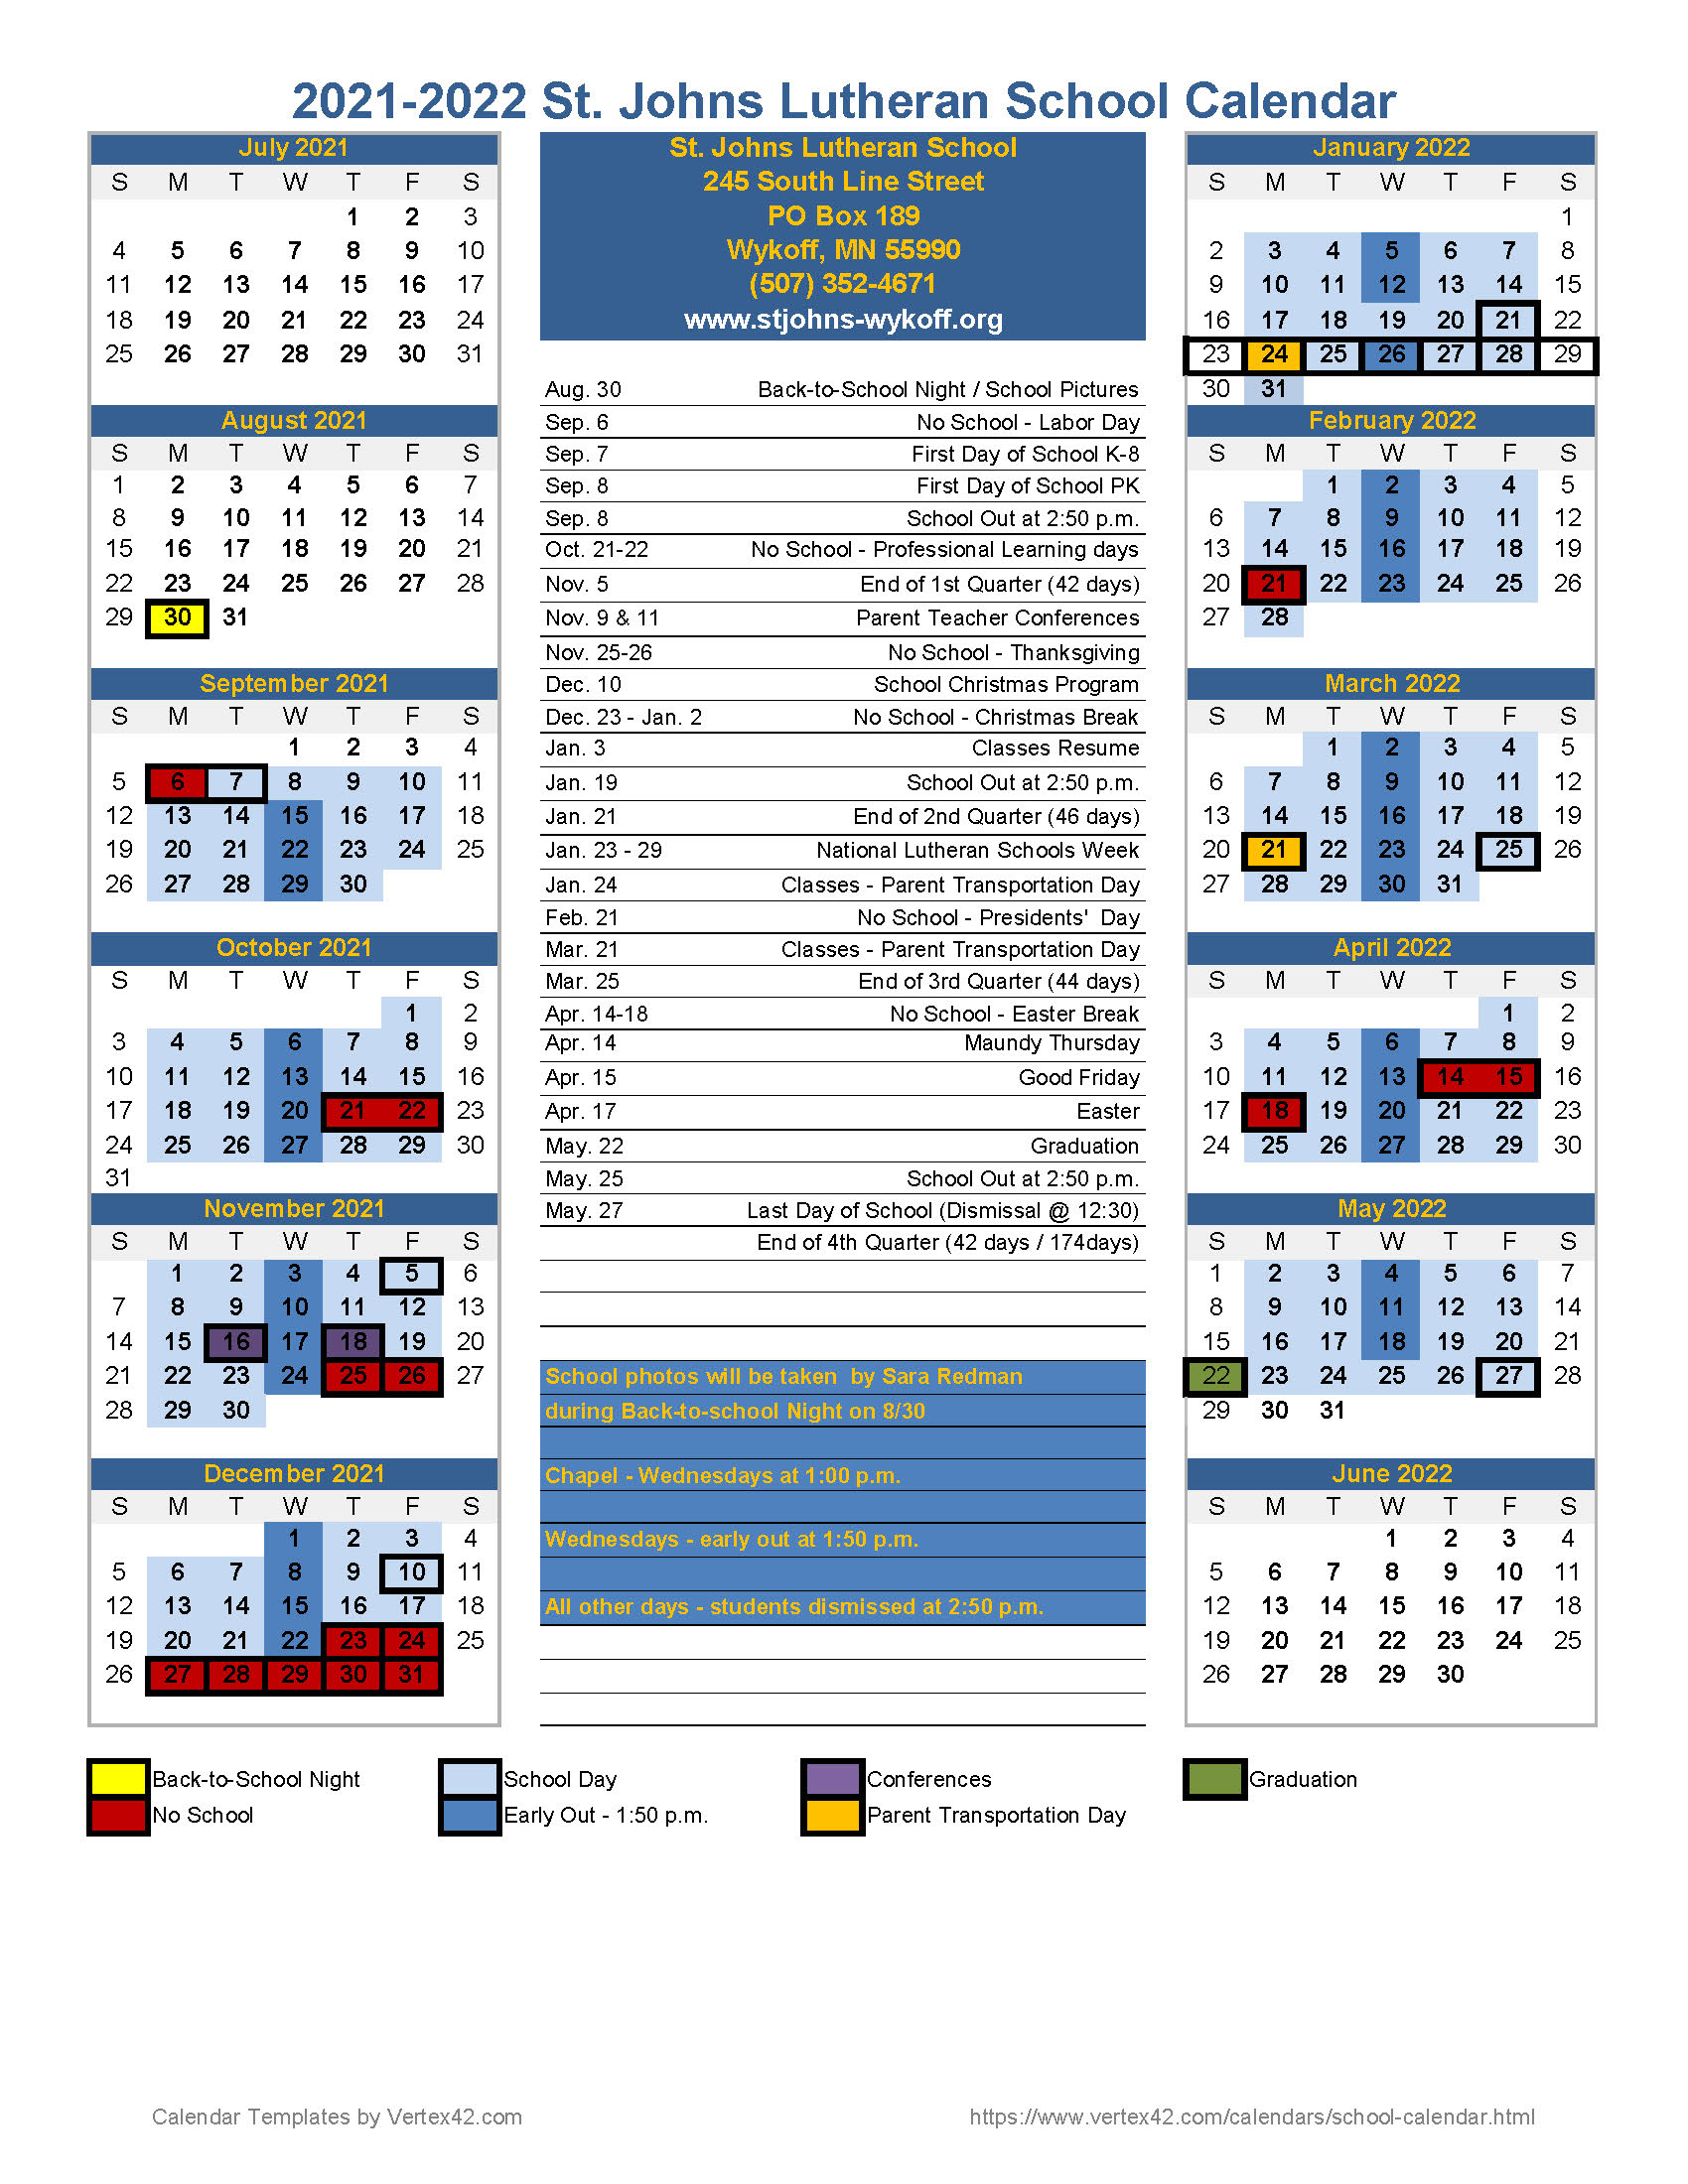 Charlotte Public School Calendar 2022 2023 Schoolcalendars net